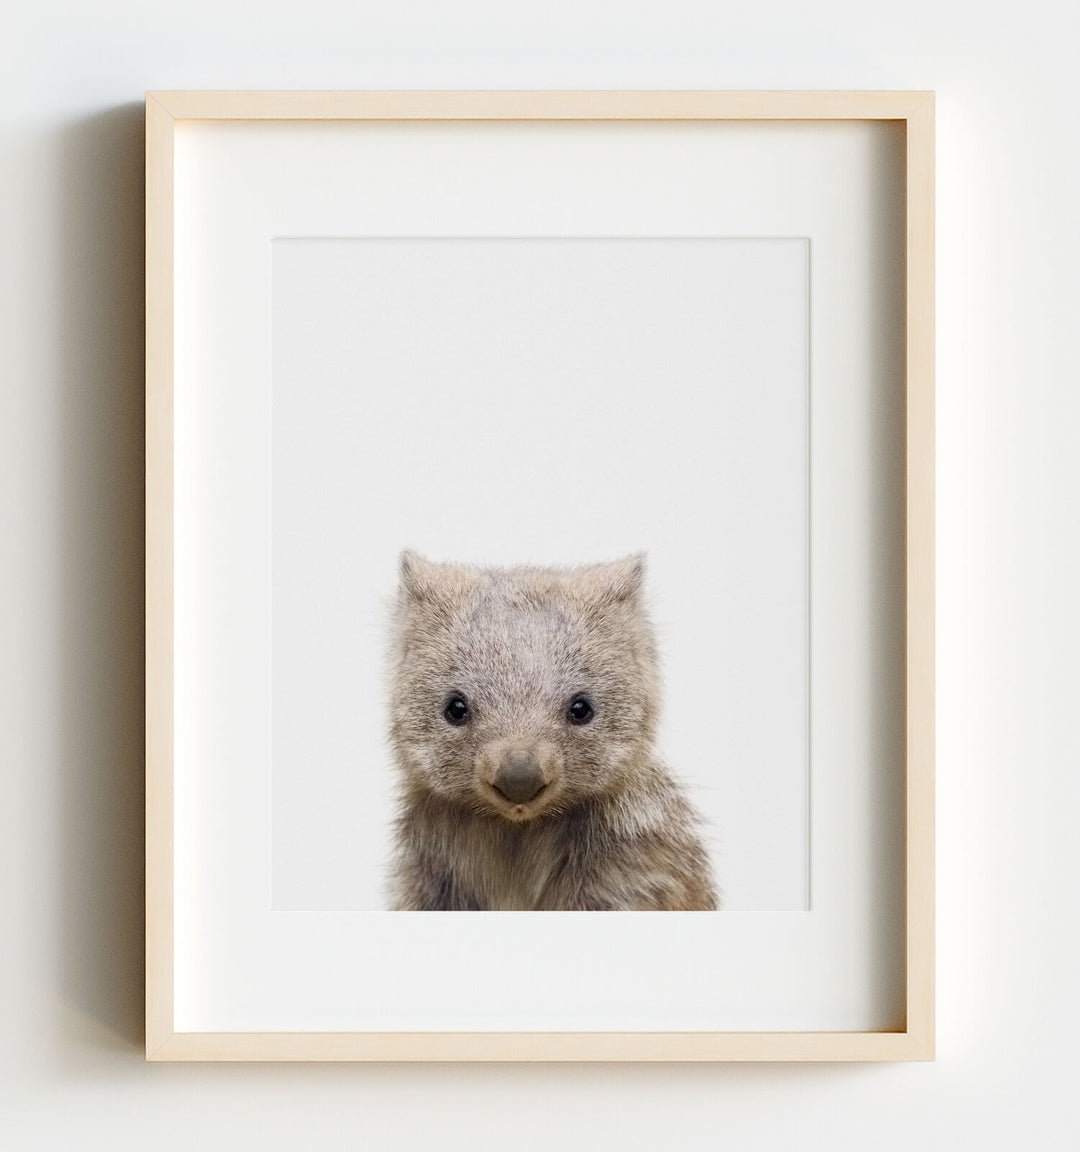 Baby Wombat Poster Print - Australian Animals for Nursery Art Decor